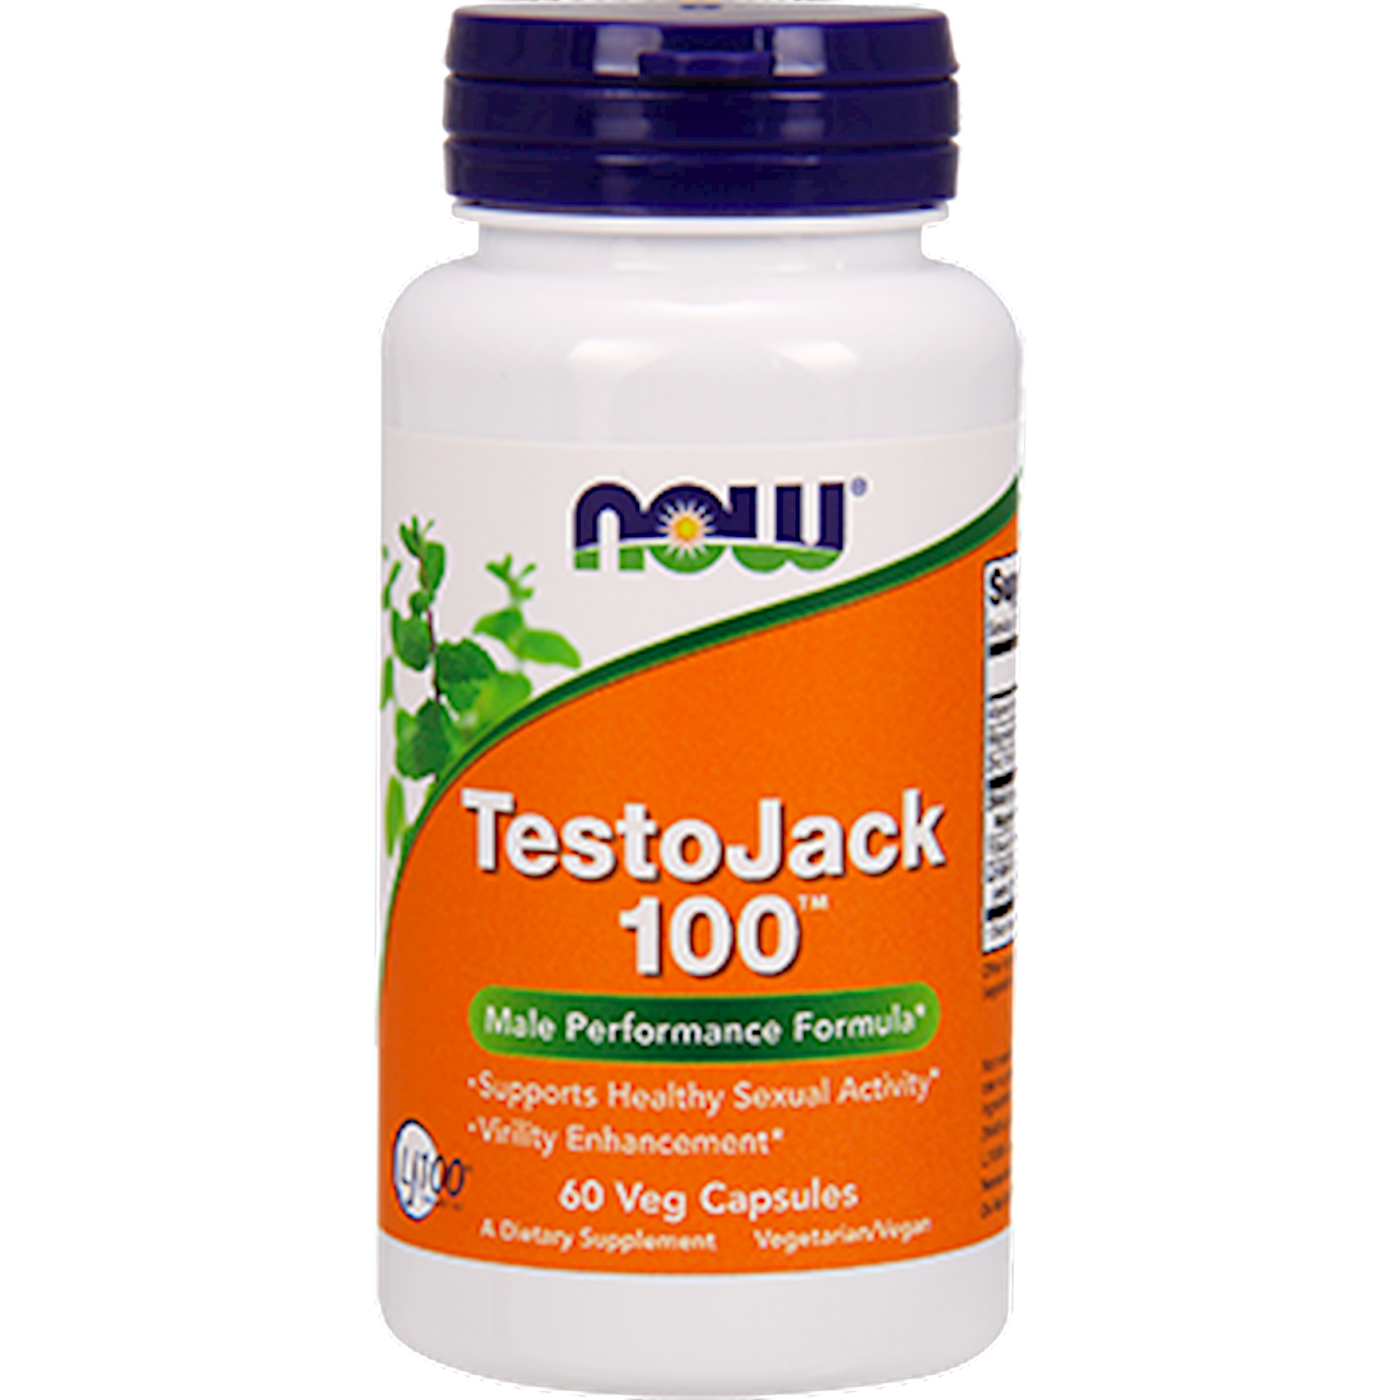 Testo Jack 100  Curated Wellness